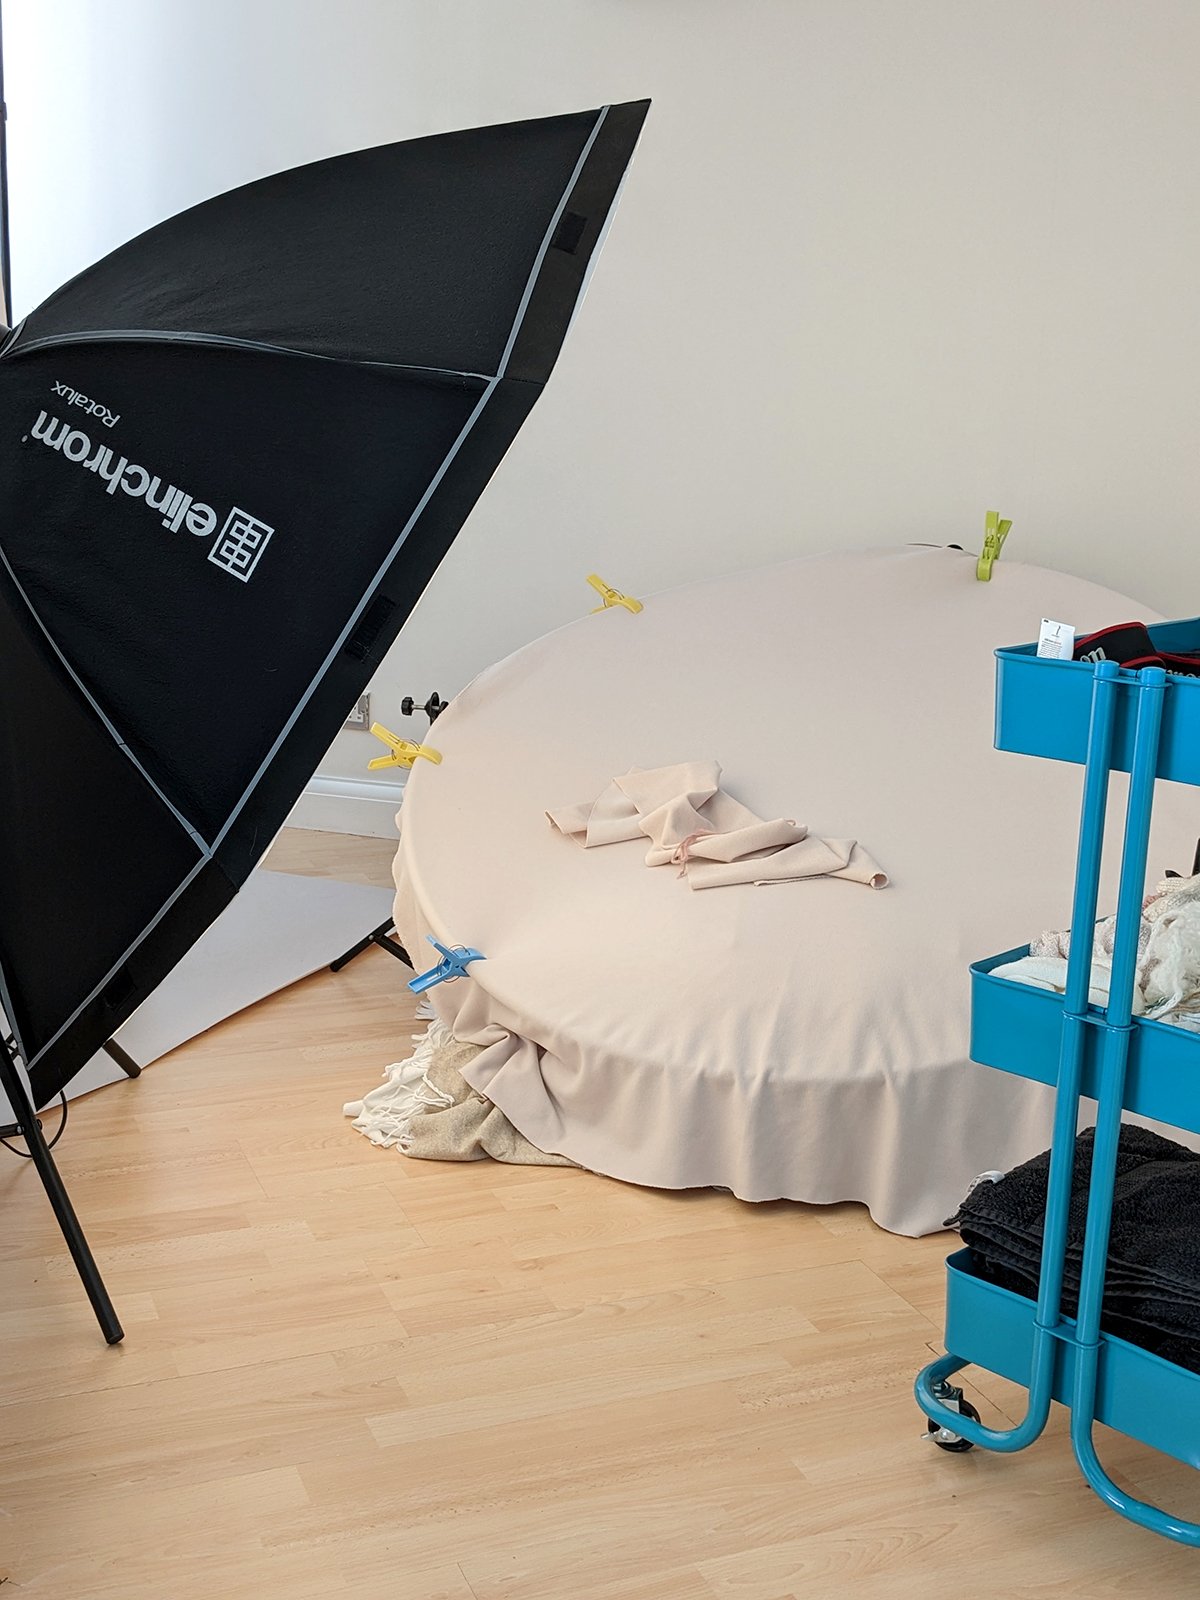 Milton Keynes studio photographer set up for a newborn photo shoot